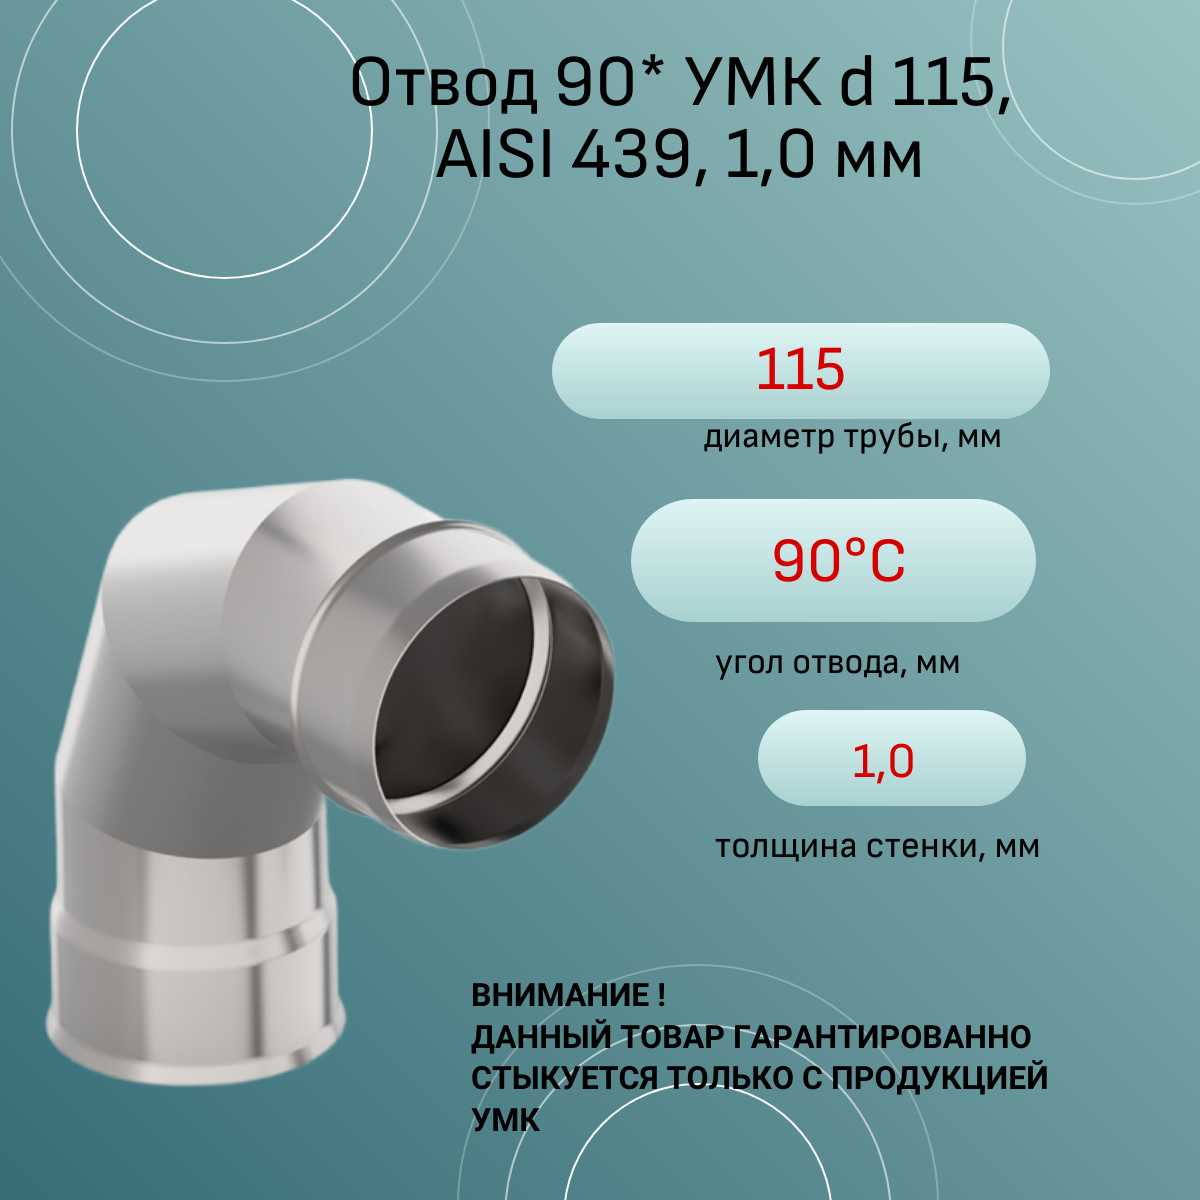 Отвод 90* УМК d 115, AISI 439, 1,0 мм